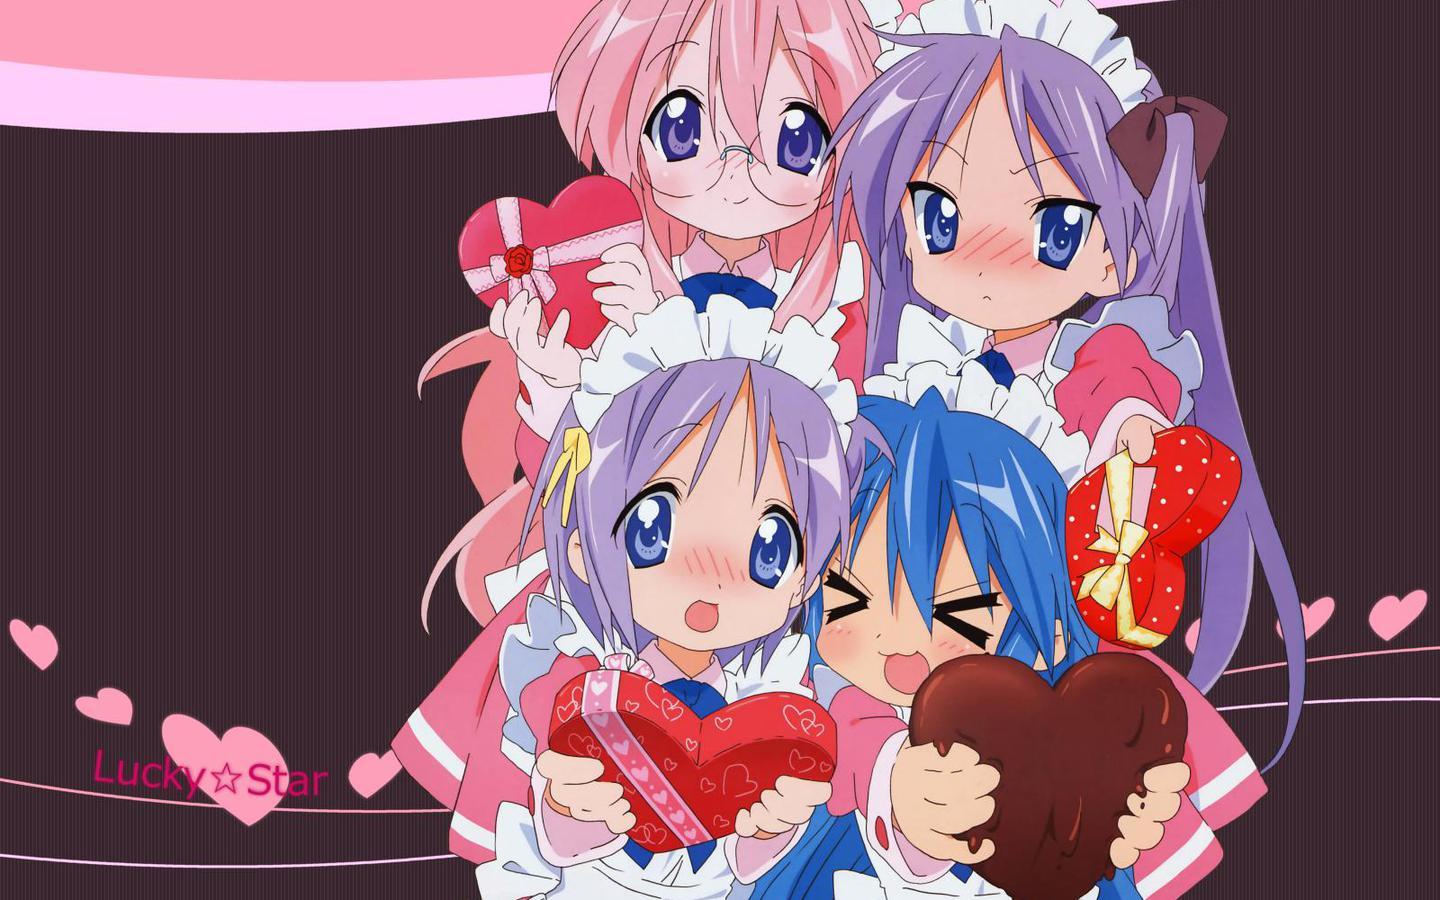 Anime Valentine's Day Wallpaper